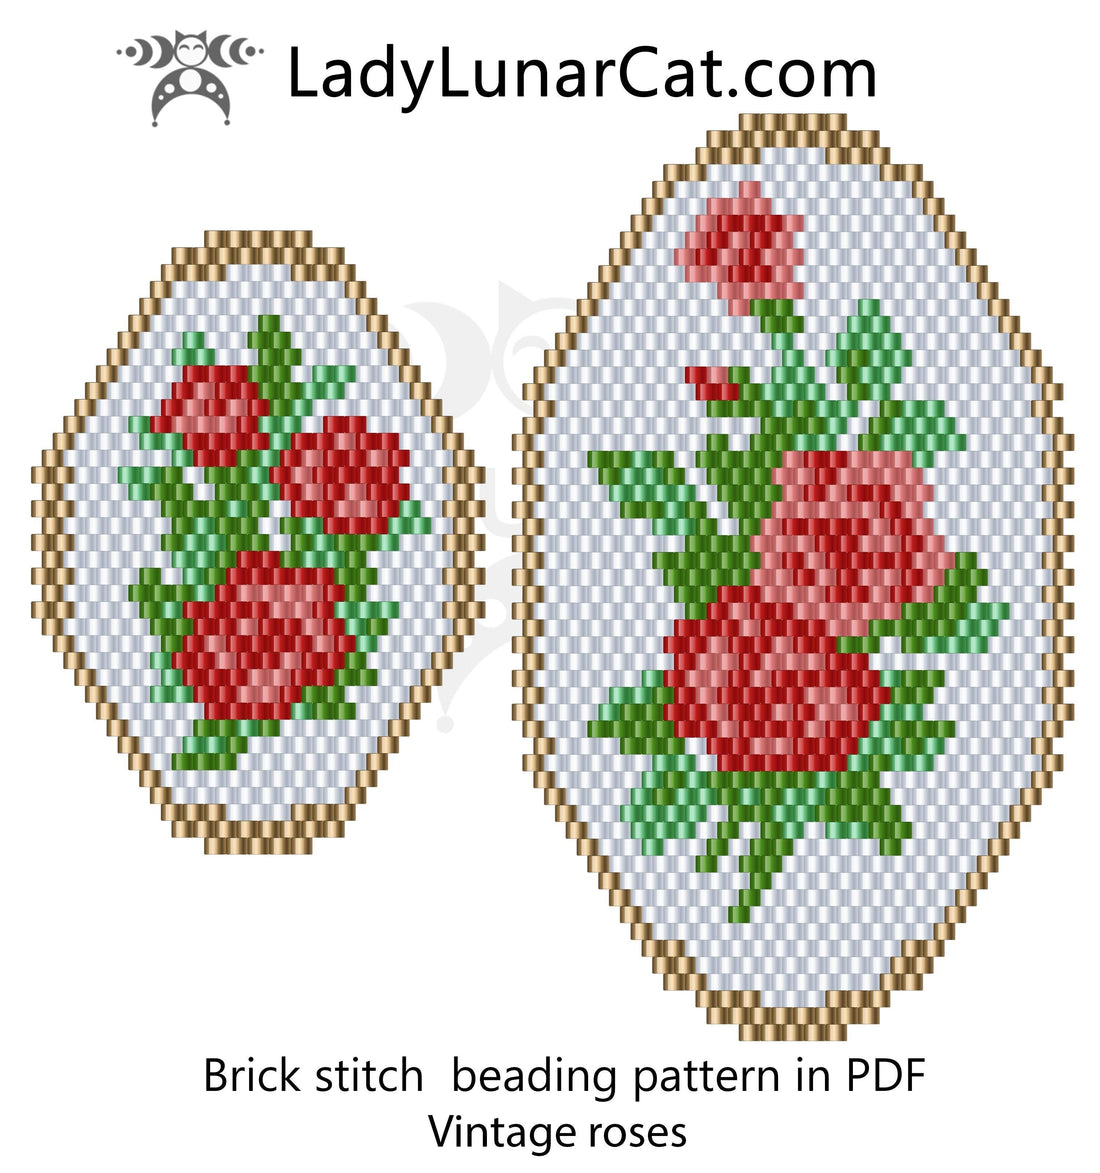 FREE Brick stitch beading pattern - Vintage Roses. by Lady Lunar Cat LadyLunarCat